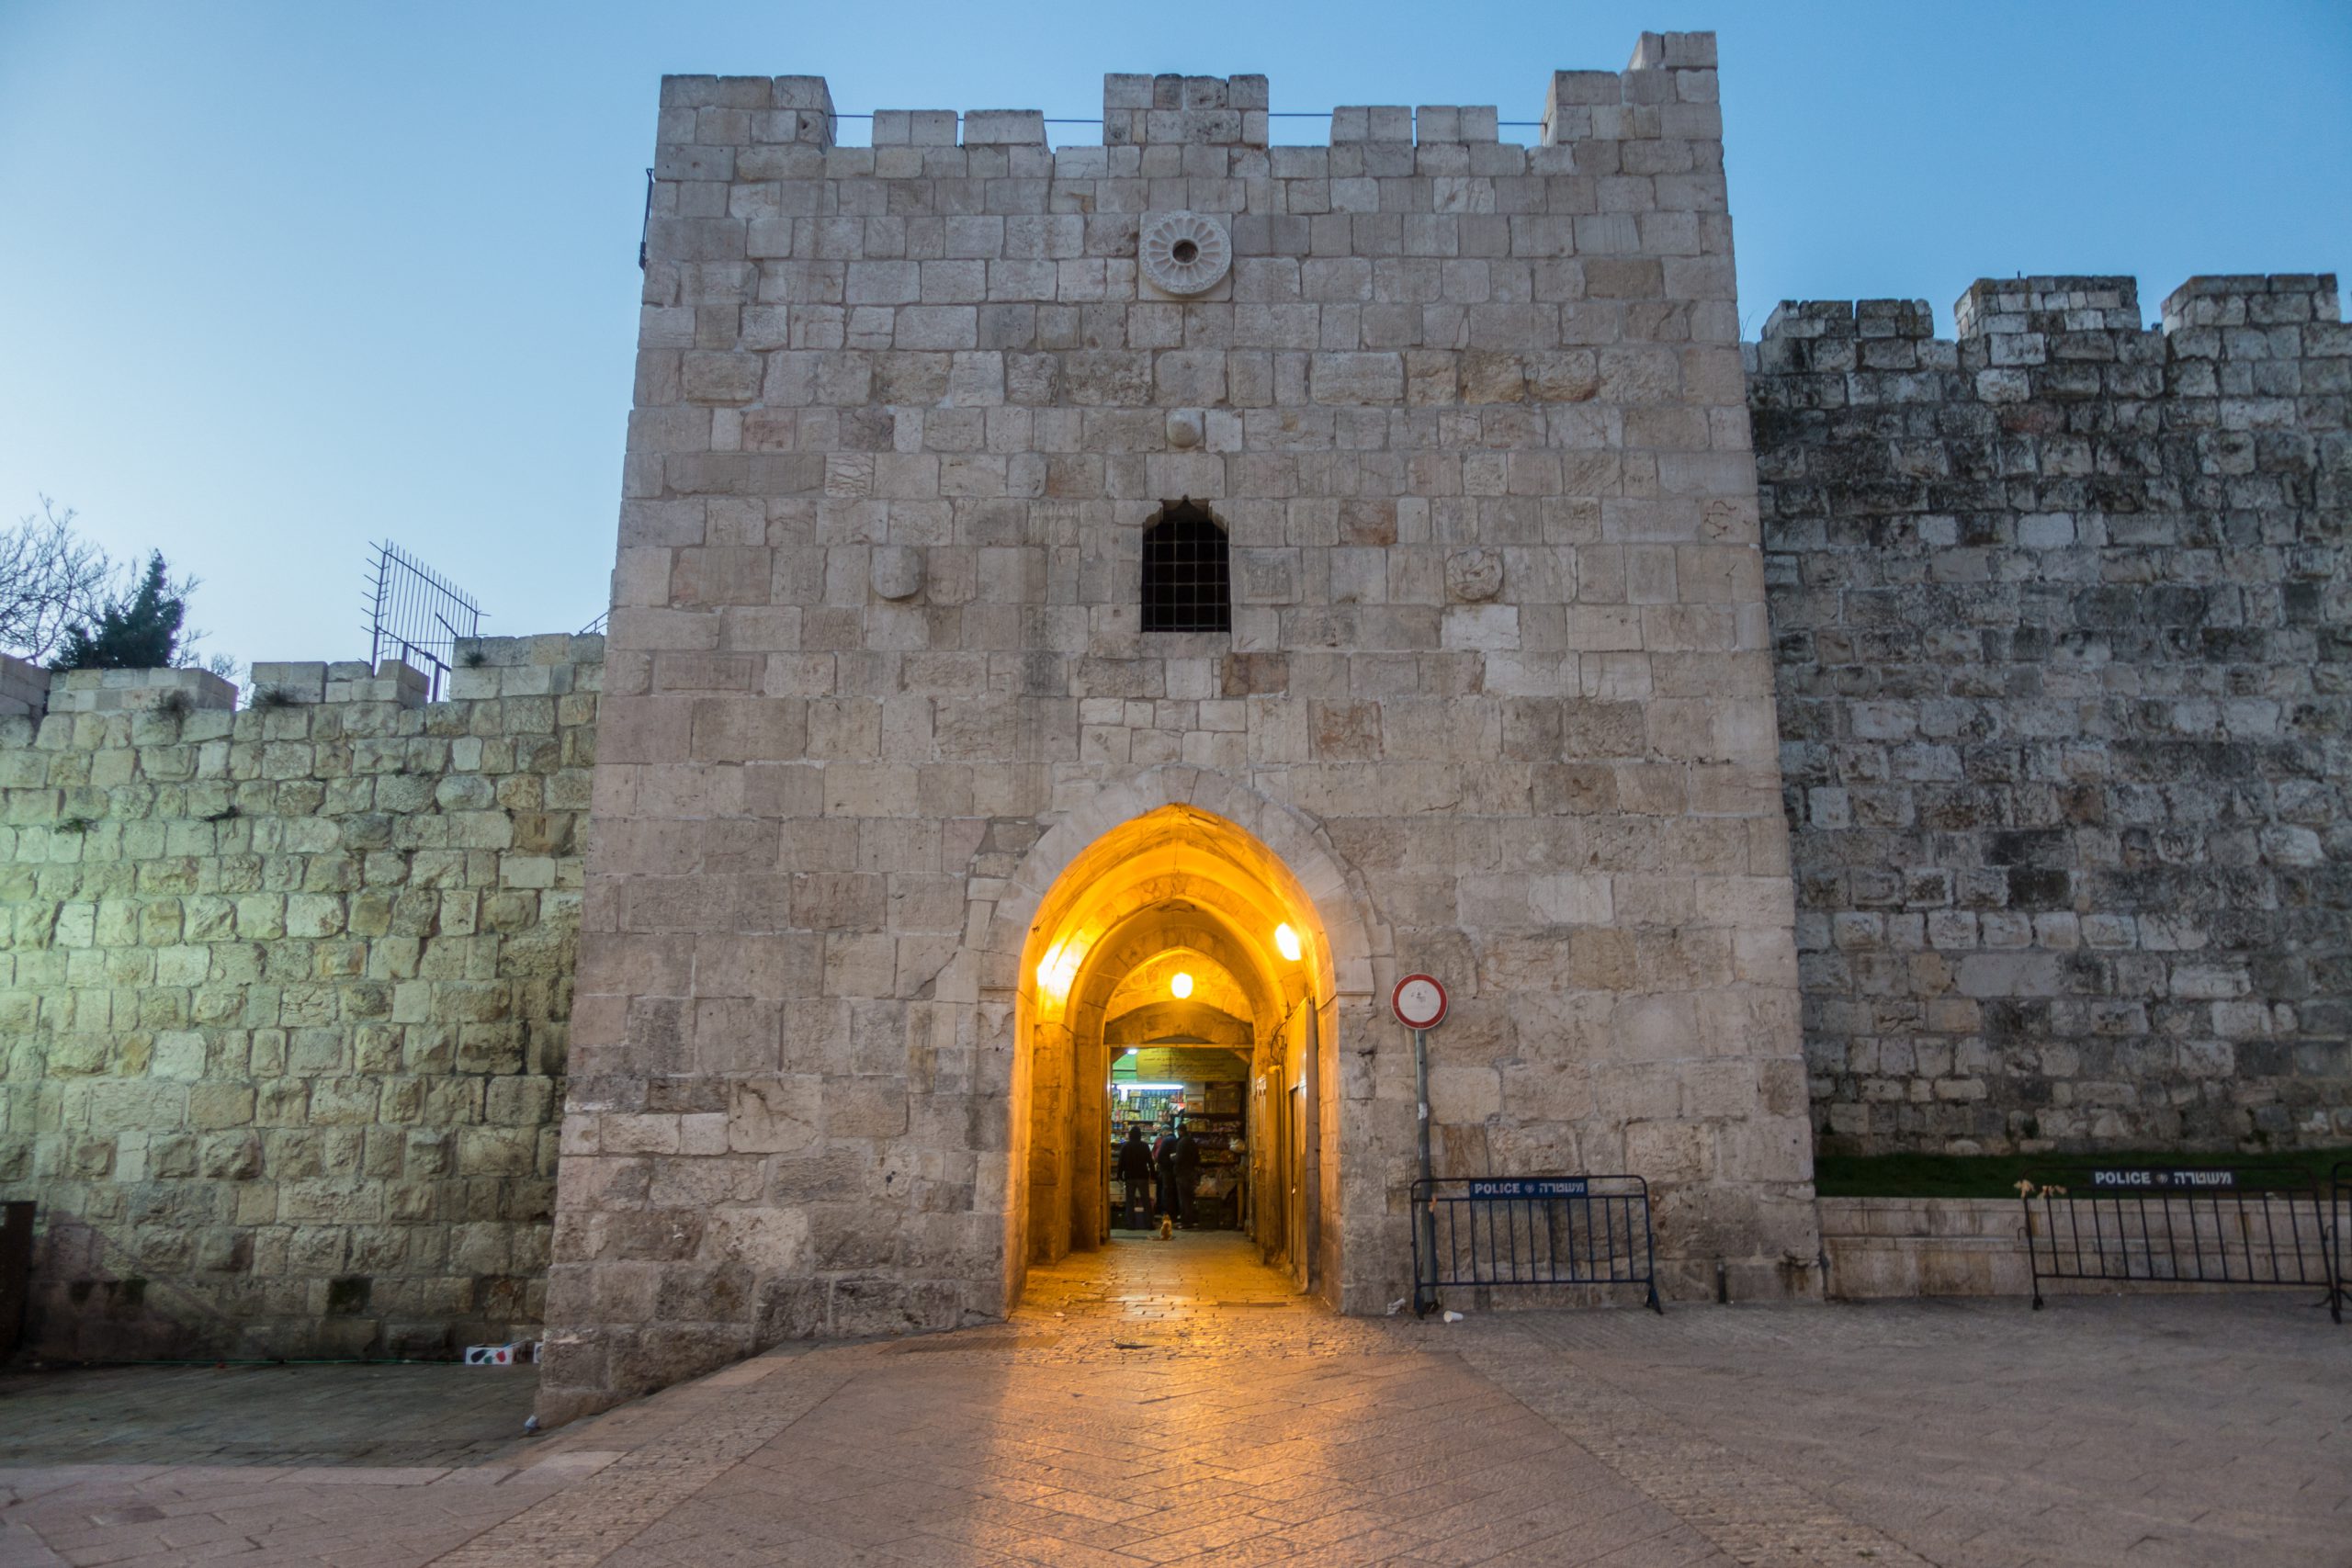 The Flower Gate Jerusalem: A Place With Many Names